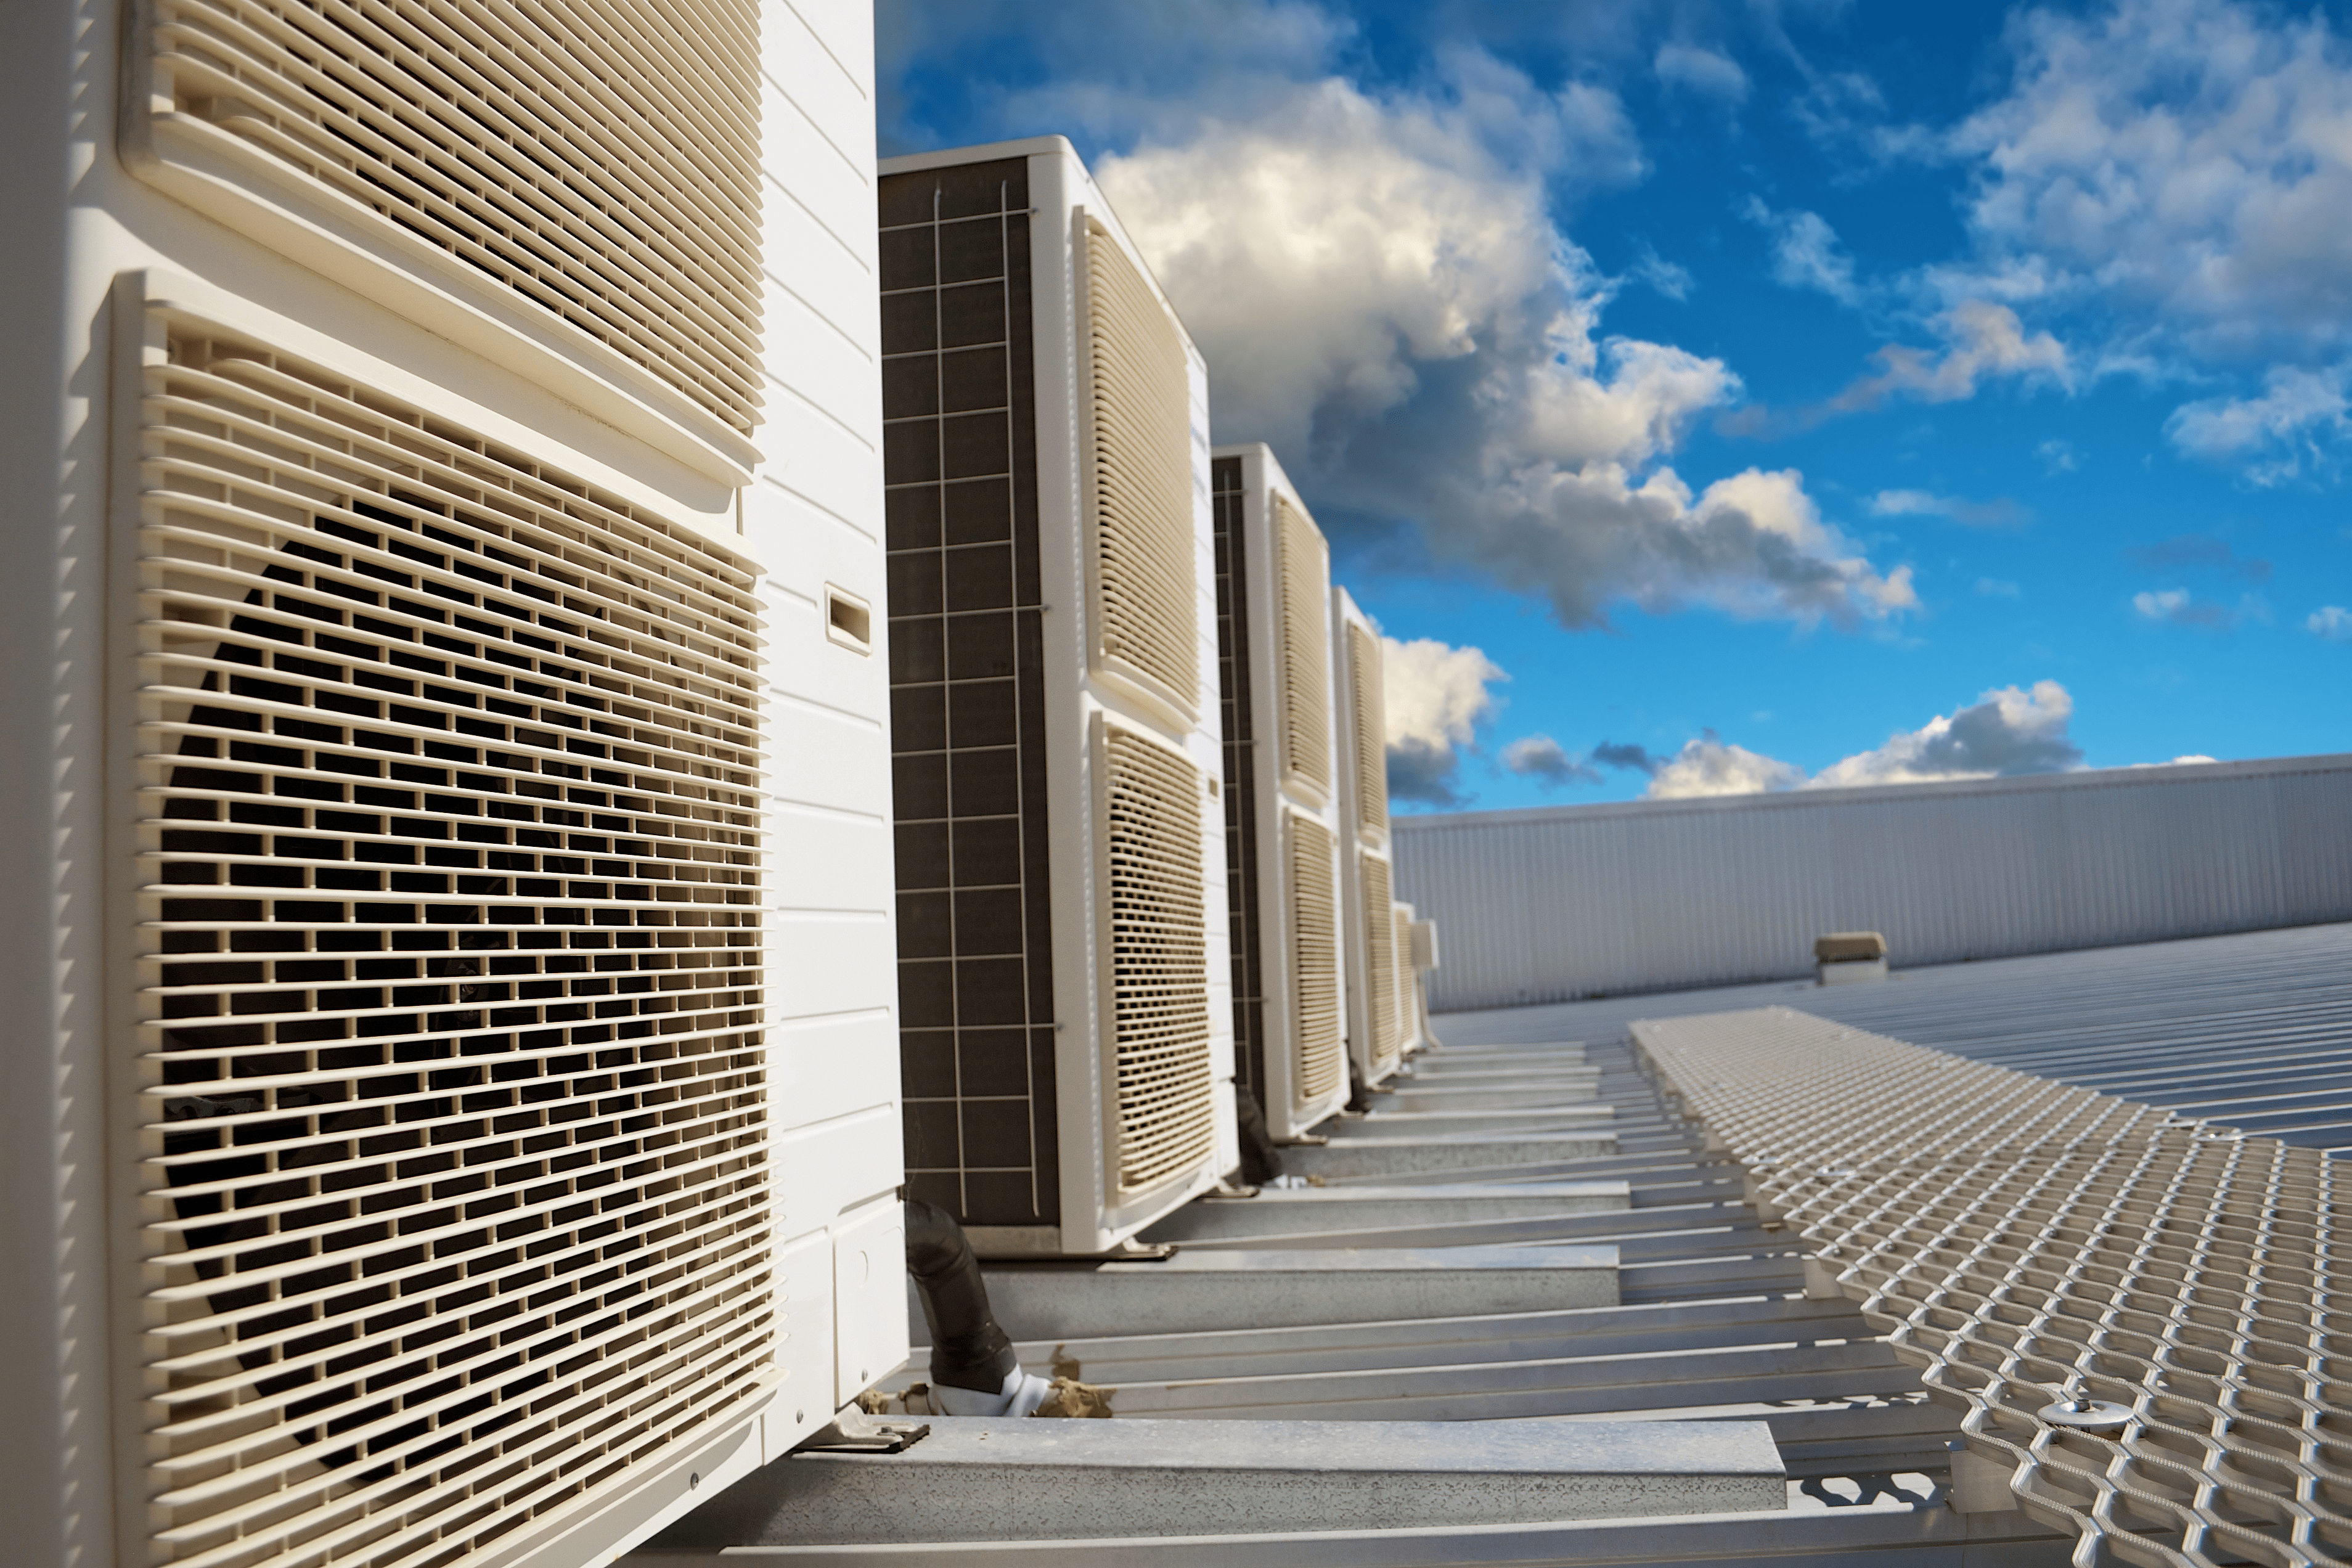 HVAC Air Conditioning Units min